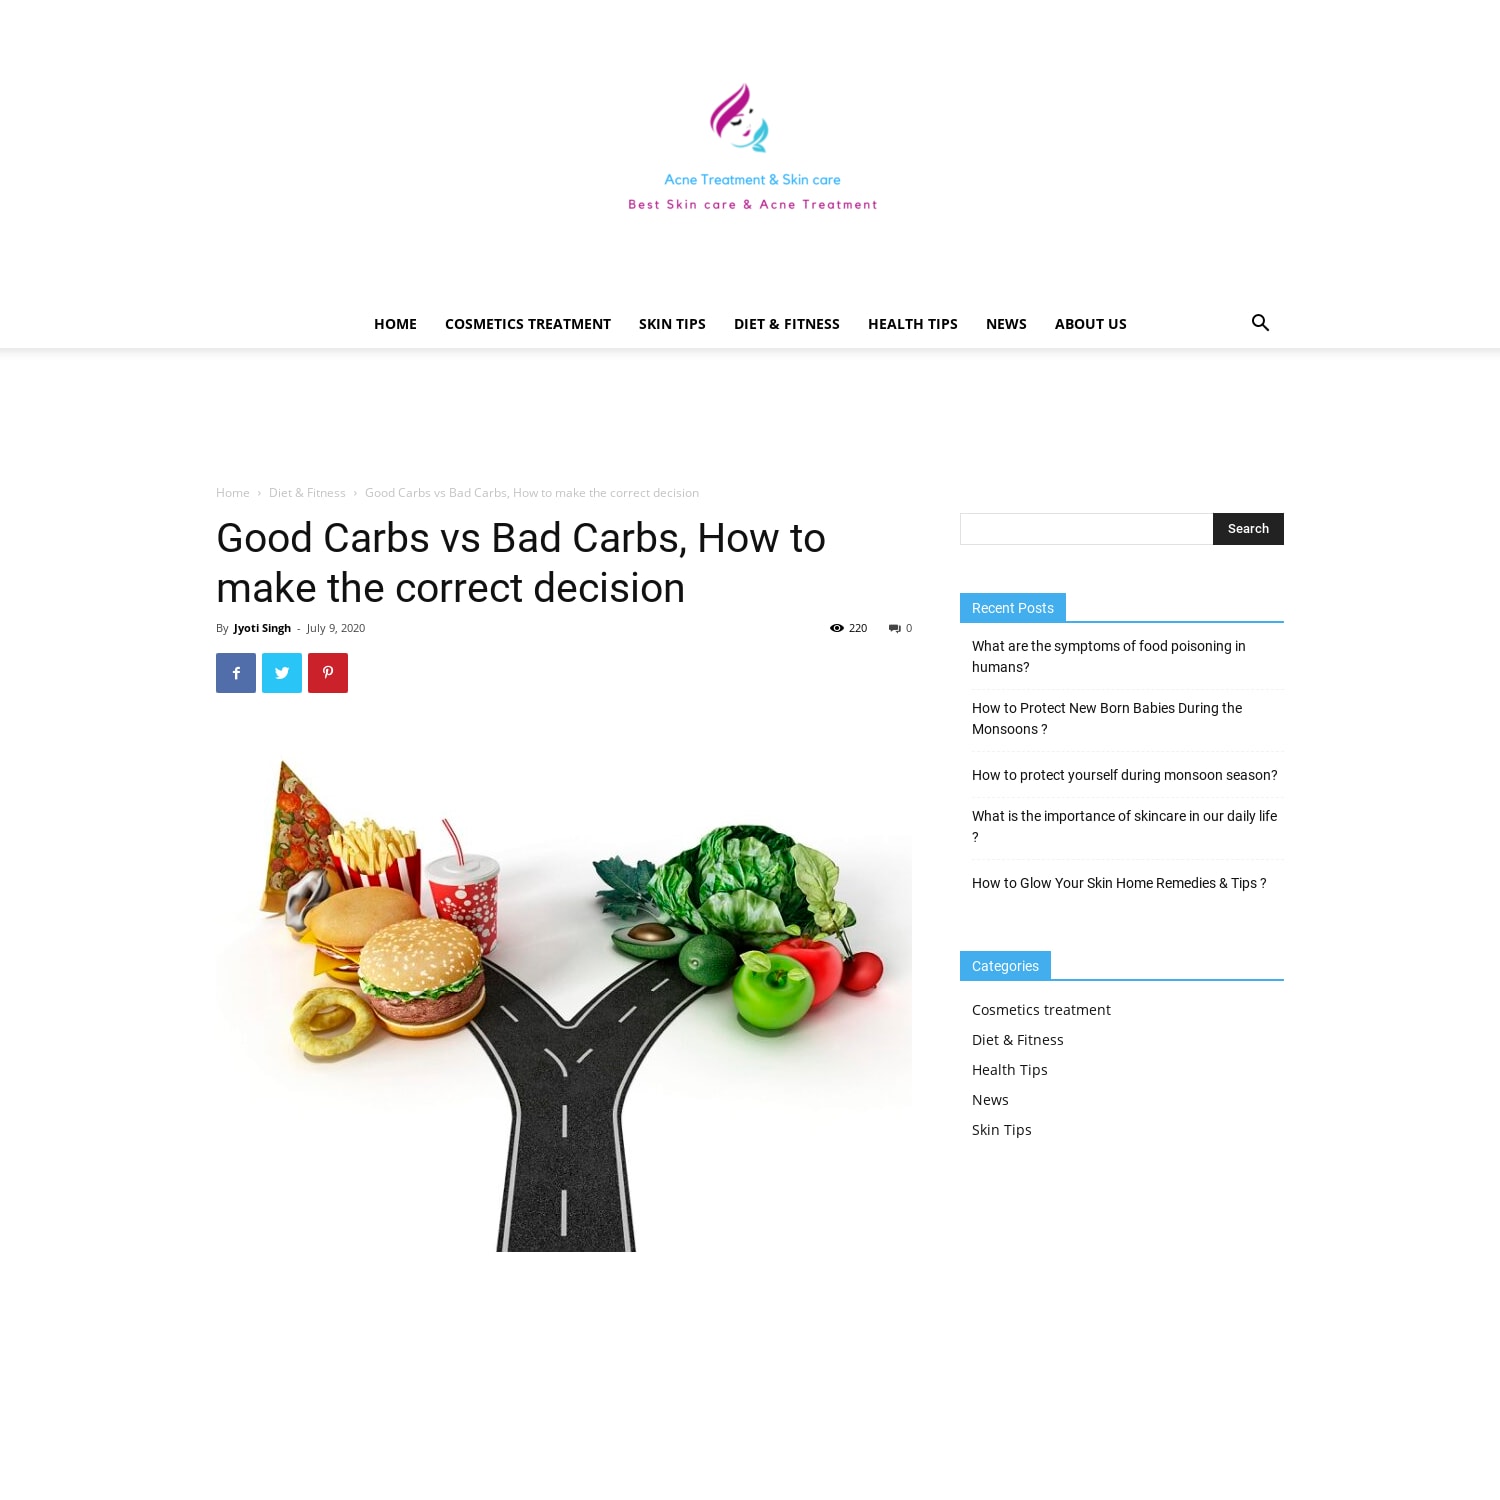 Good Carbs vs Bad Carbs | How to make the correct decision